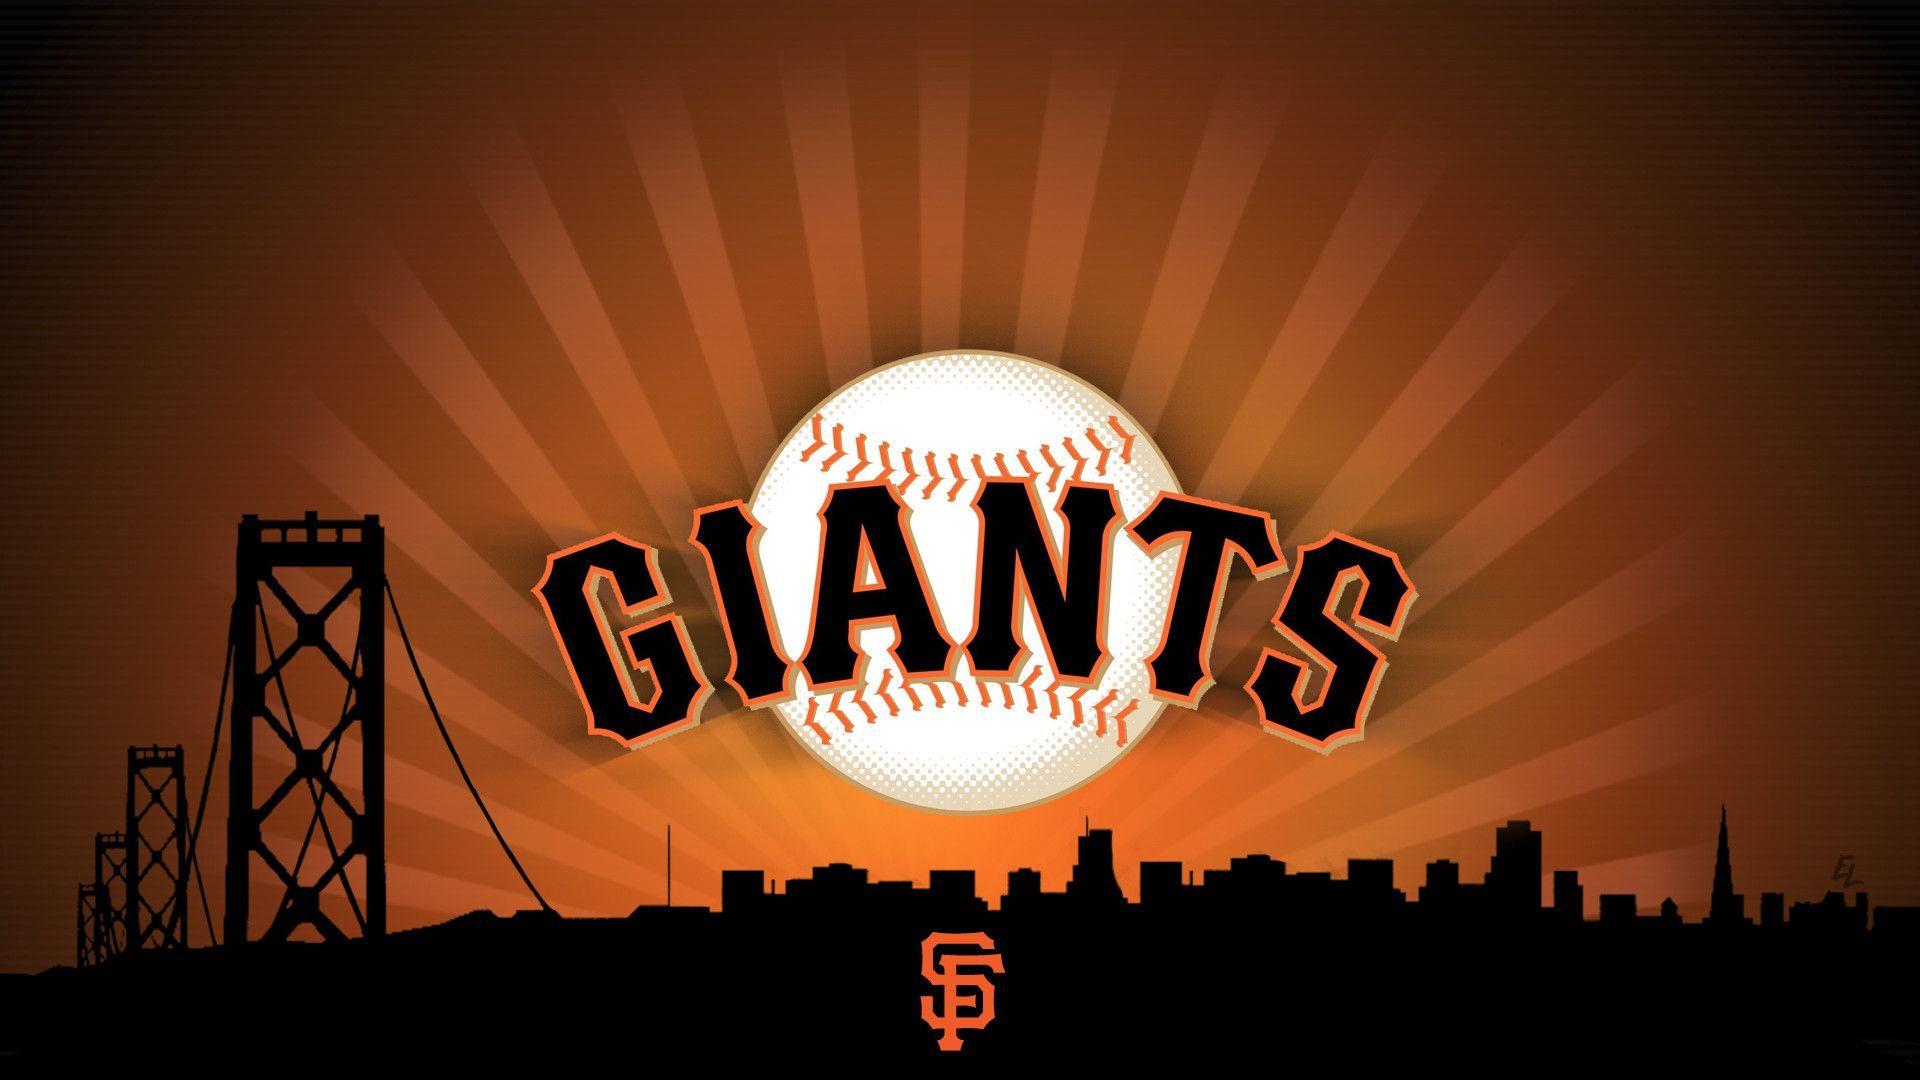 SF Giants